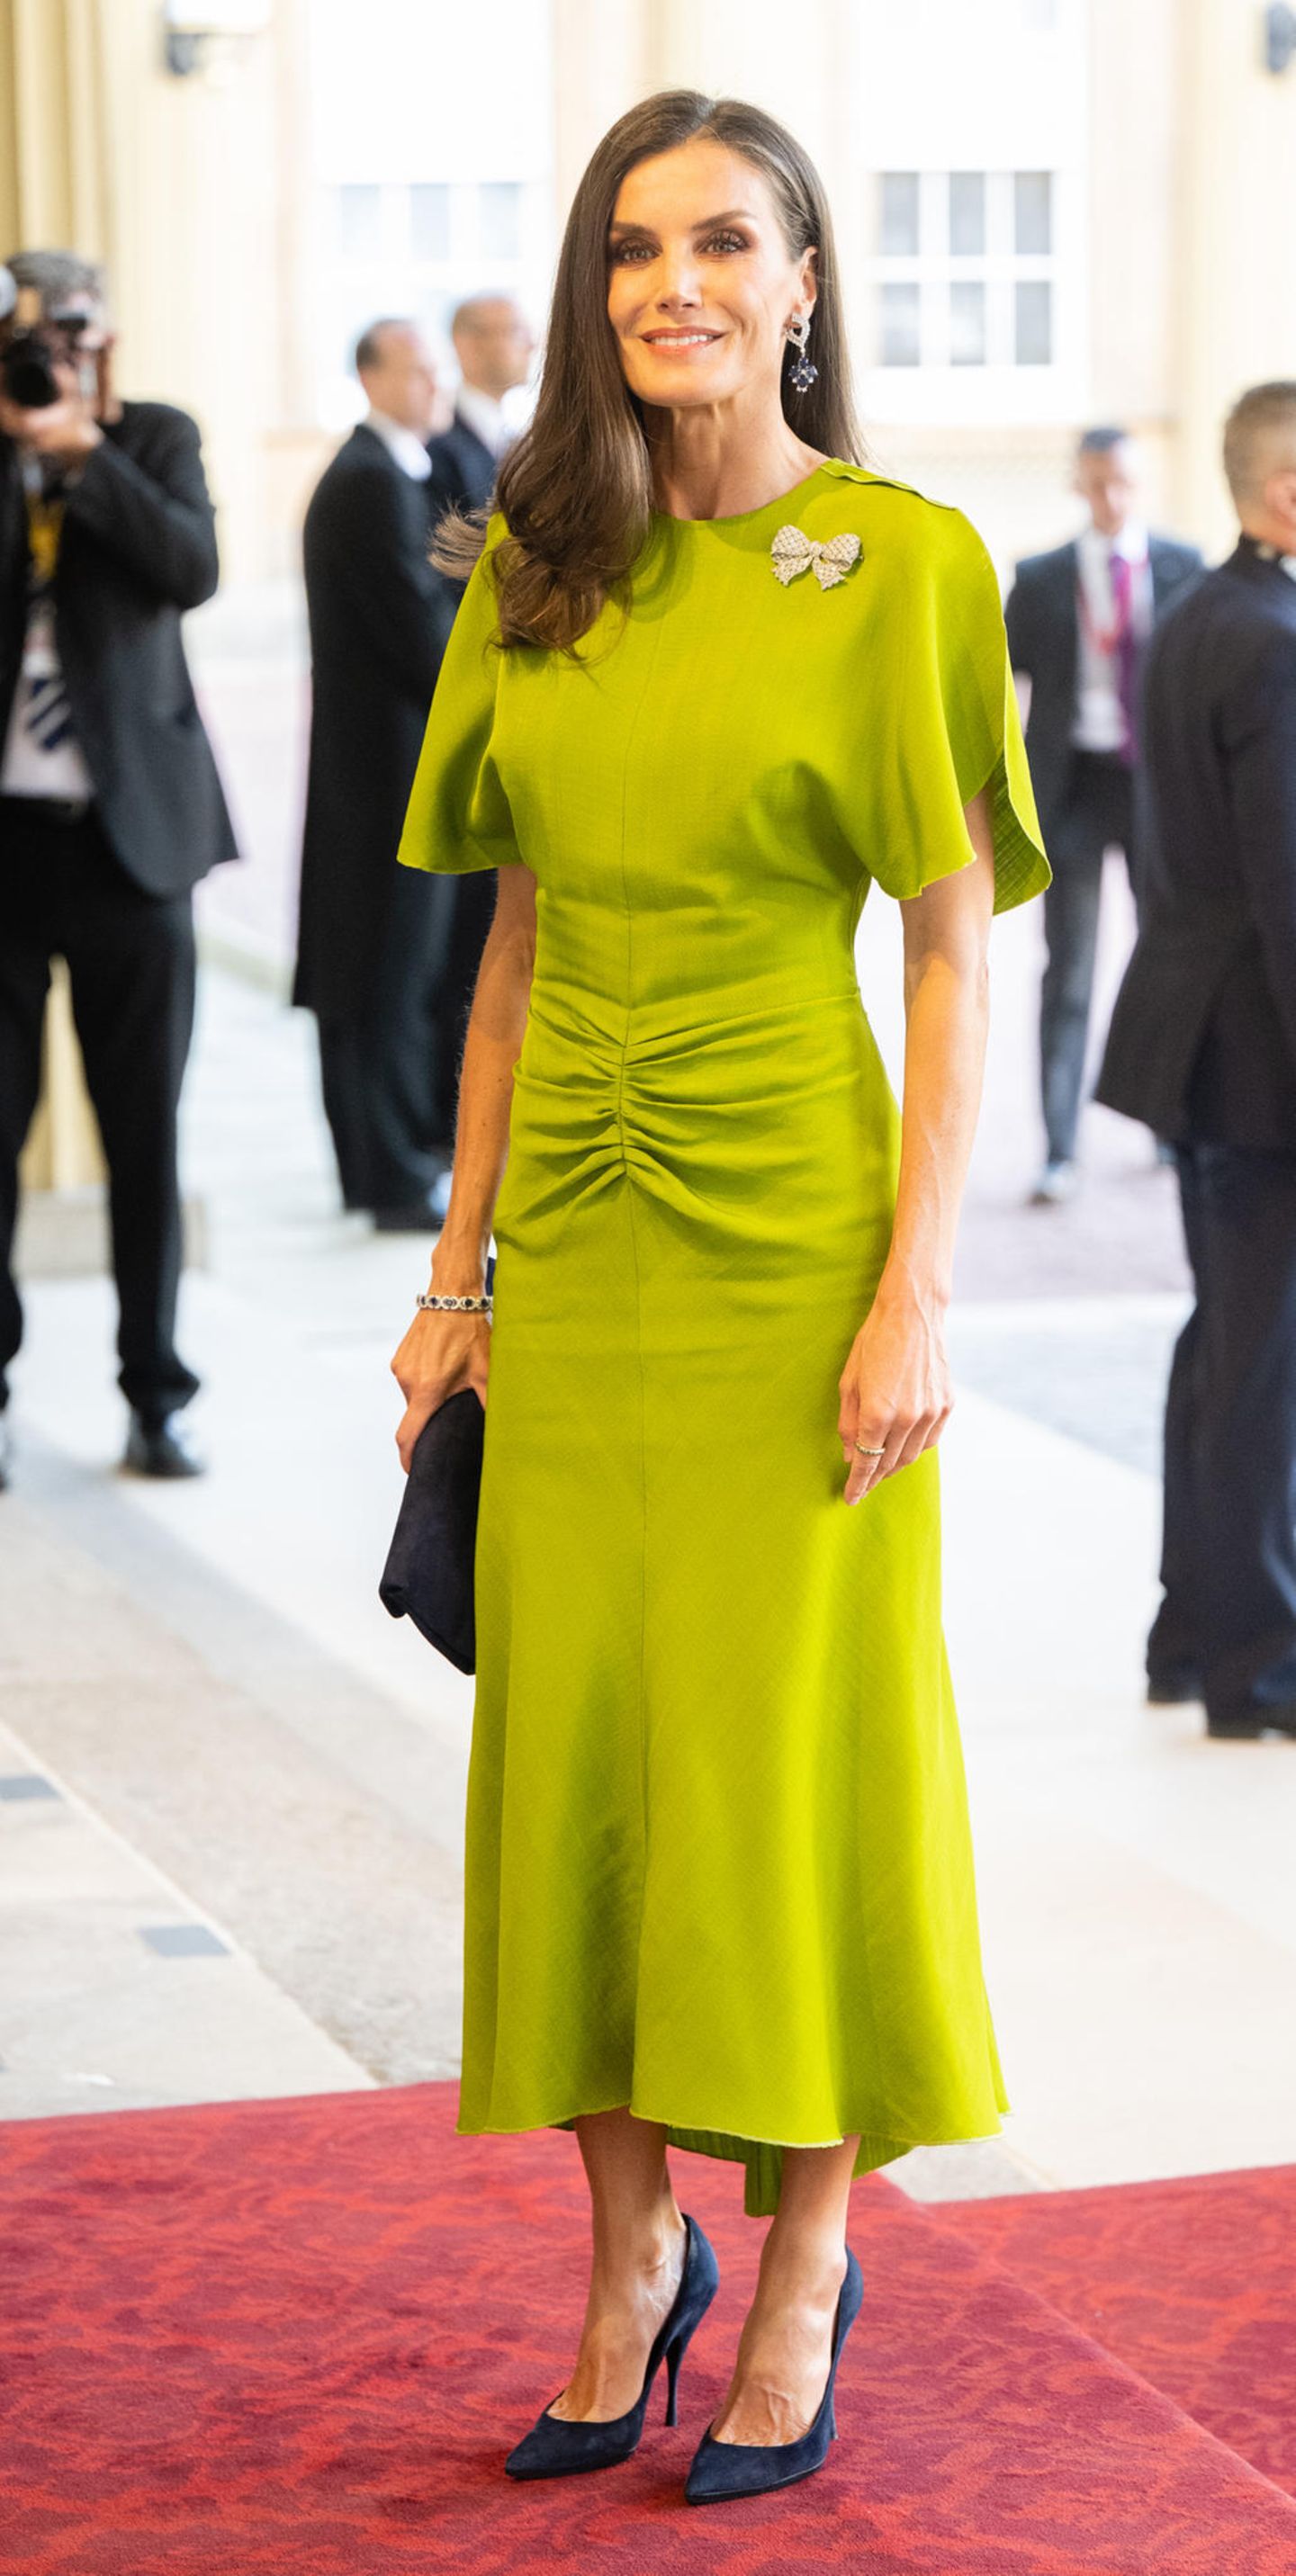 Royale Fashion-Looks: Der Style von Königin Letizia | GALA.de